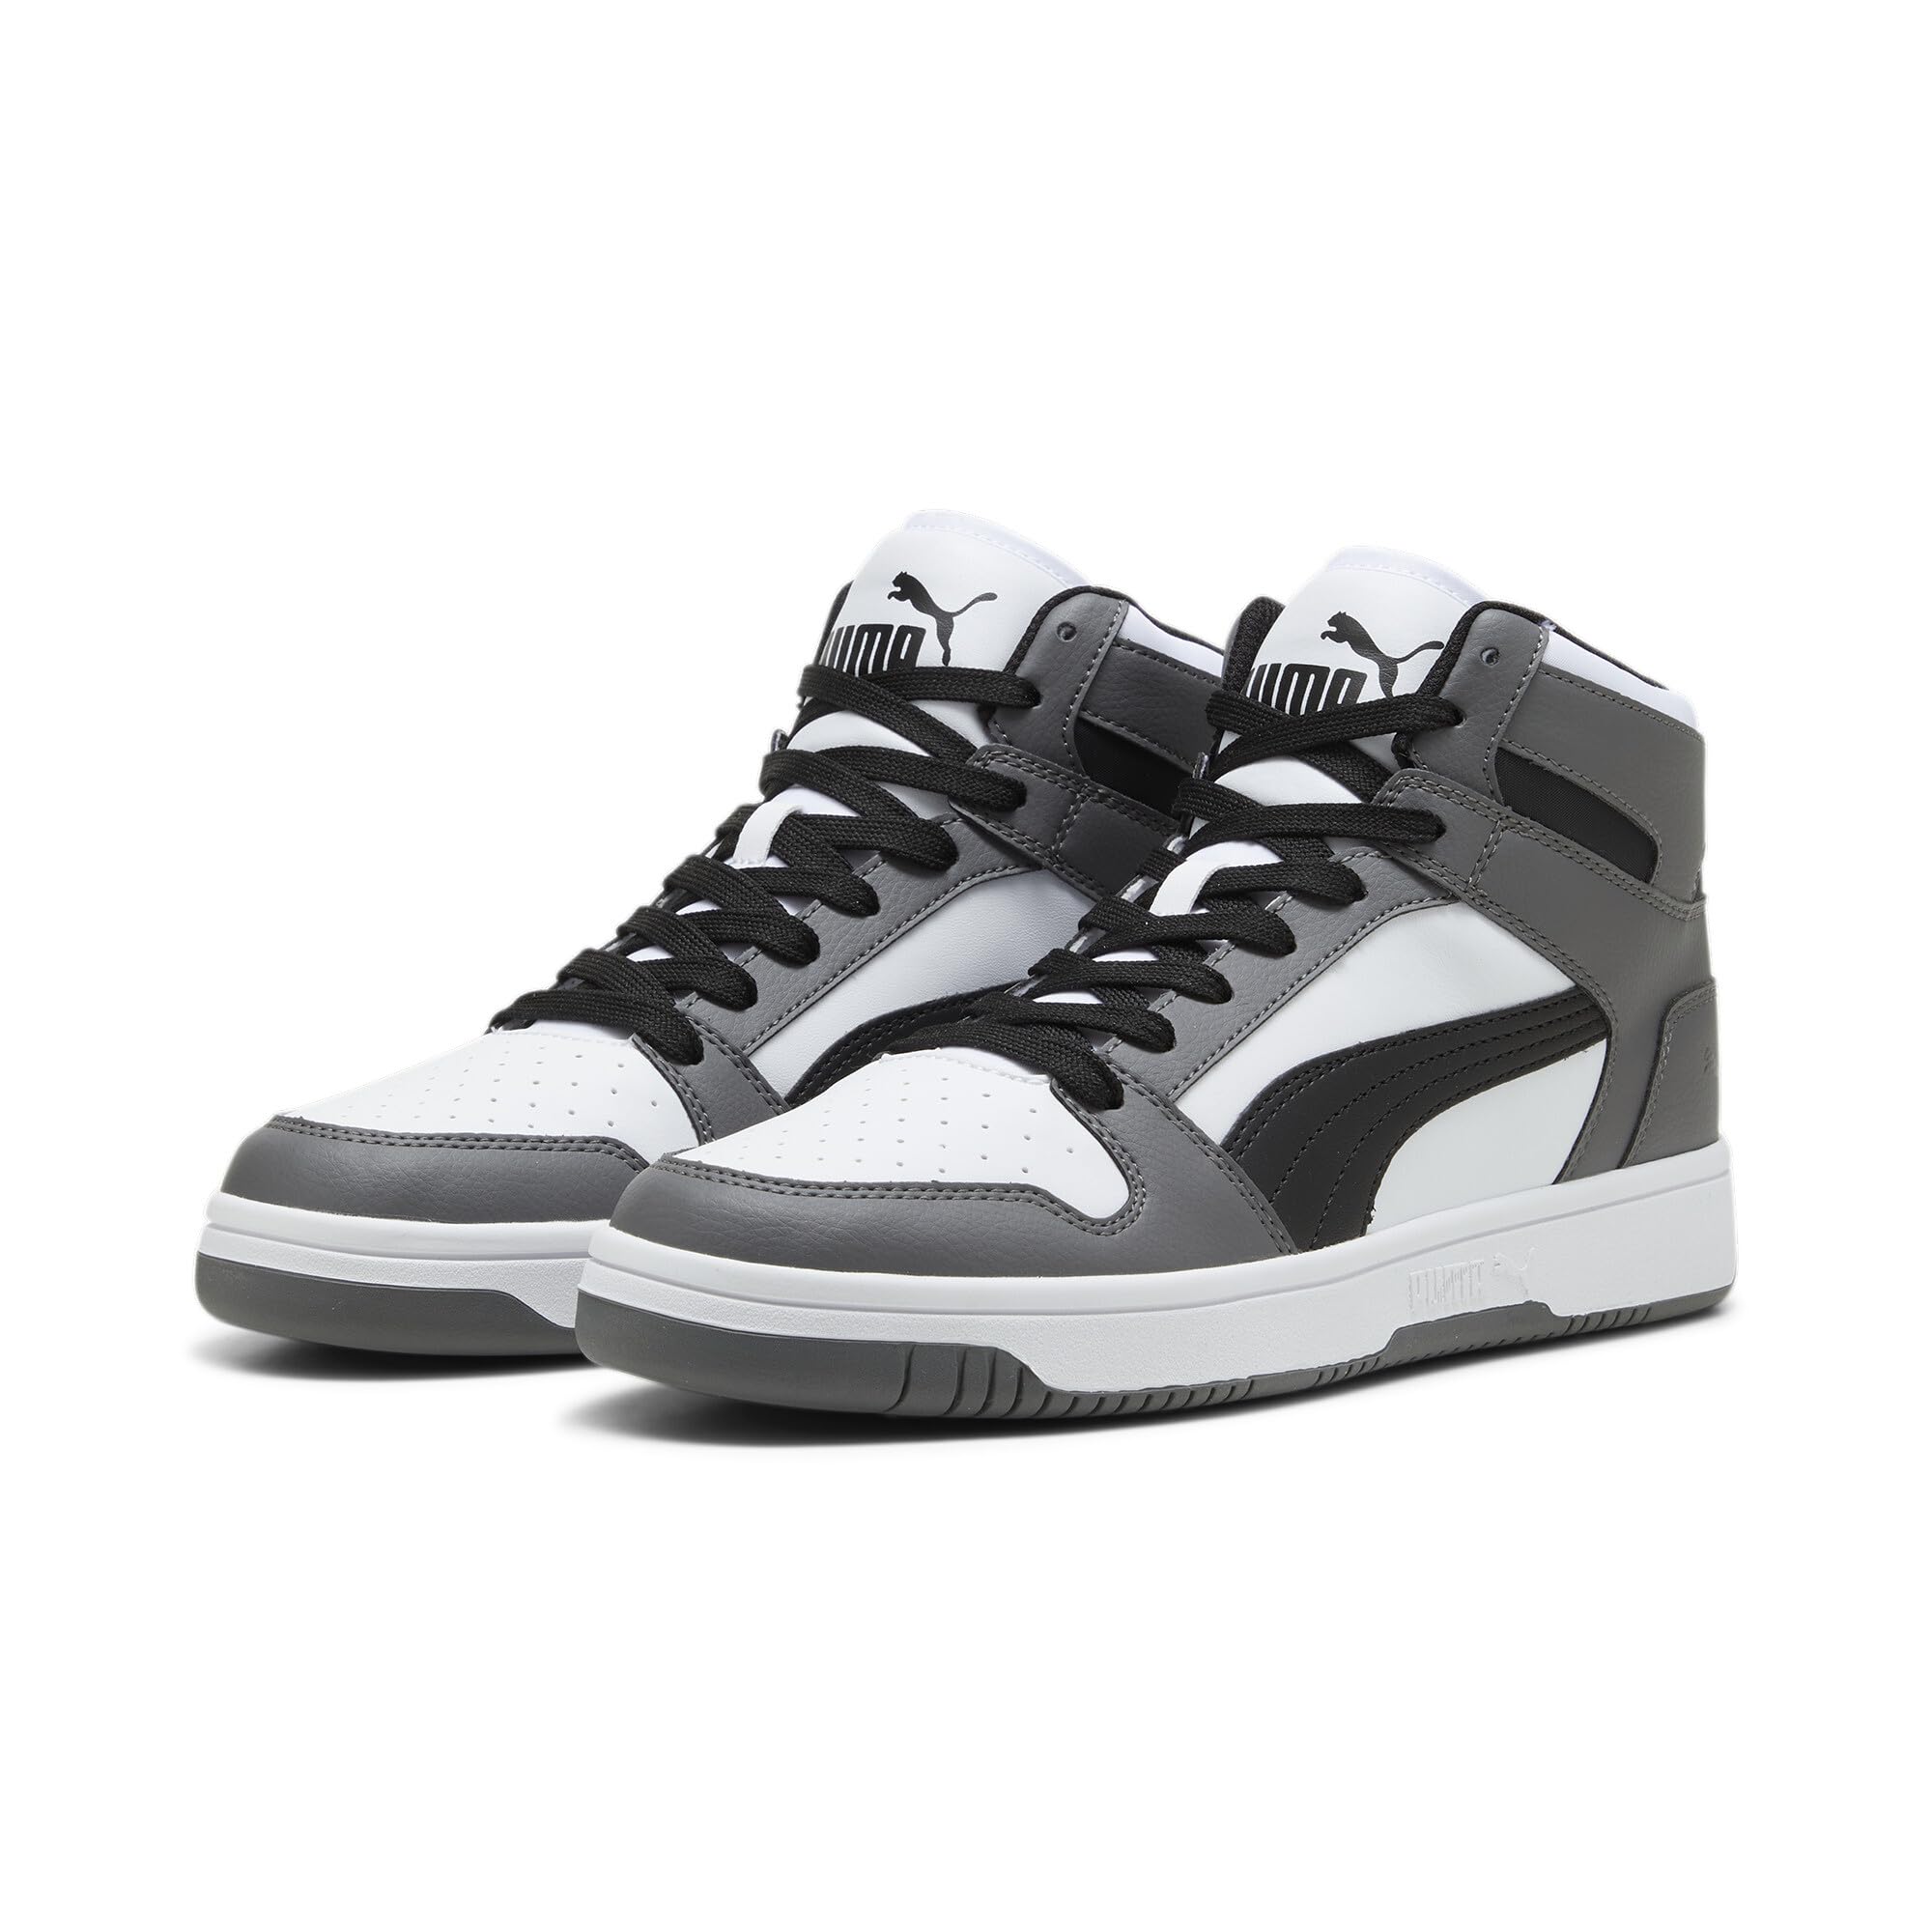 PUMA Men's Rebound Layup Sneaker, White Black-Cool Dark Gray, 10.5